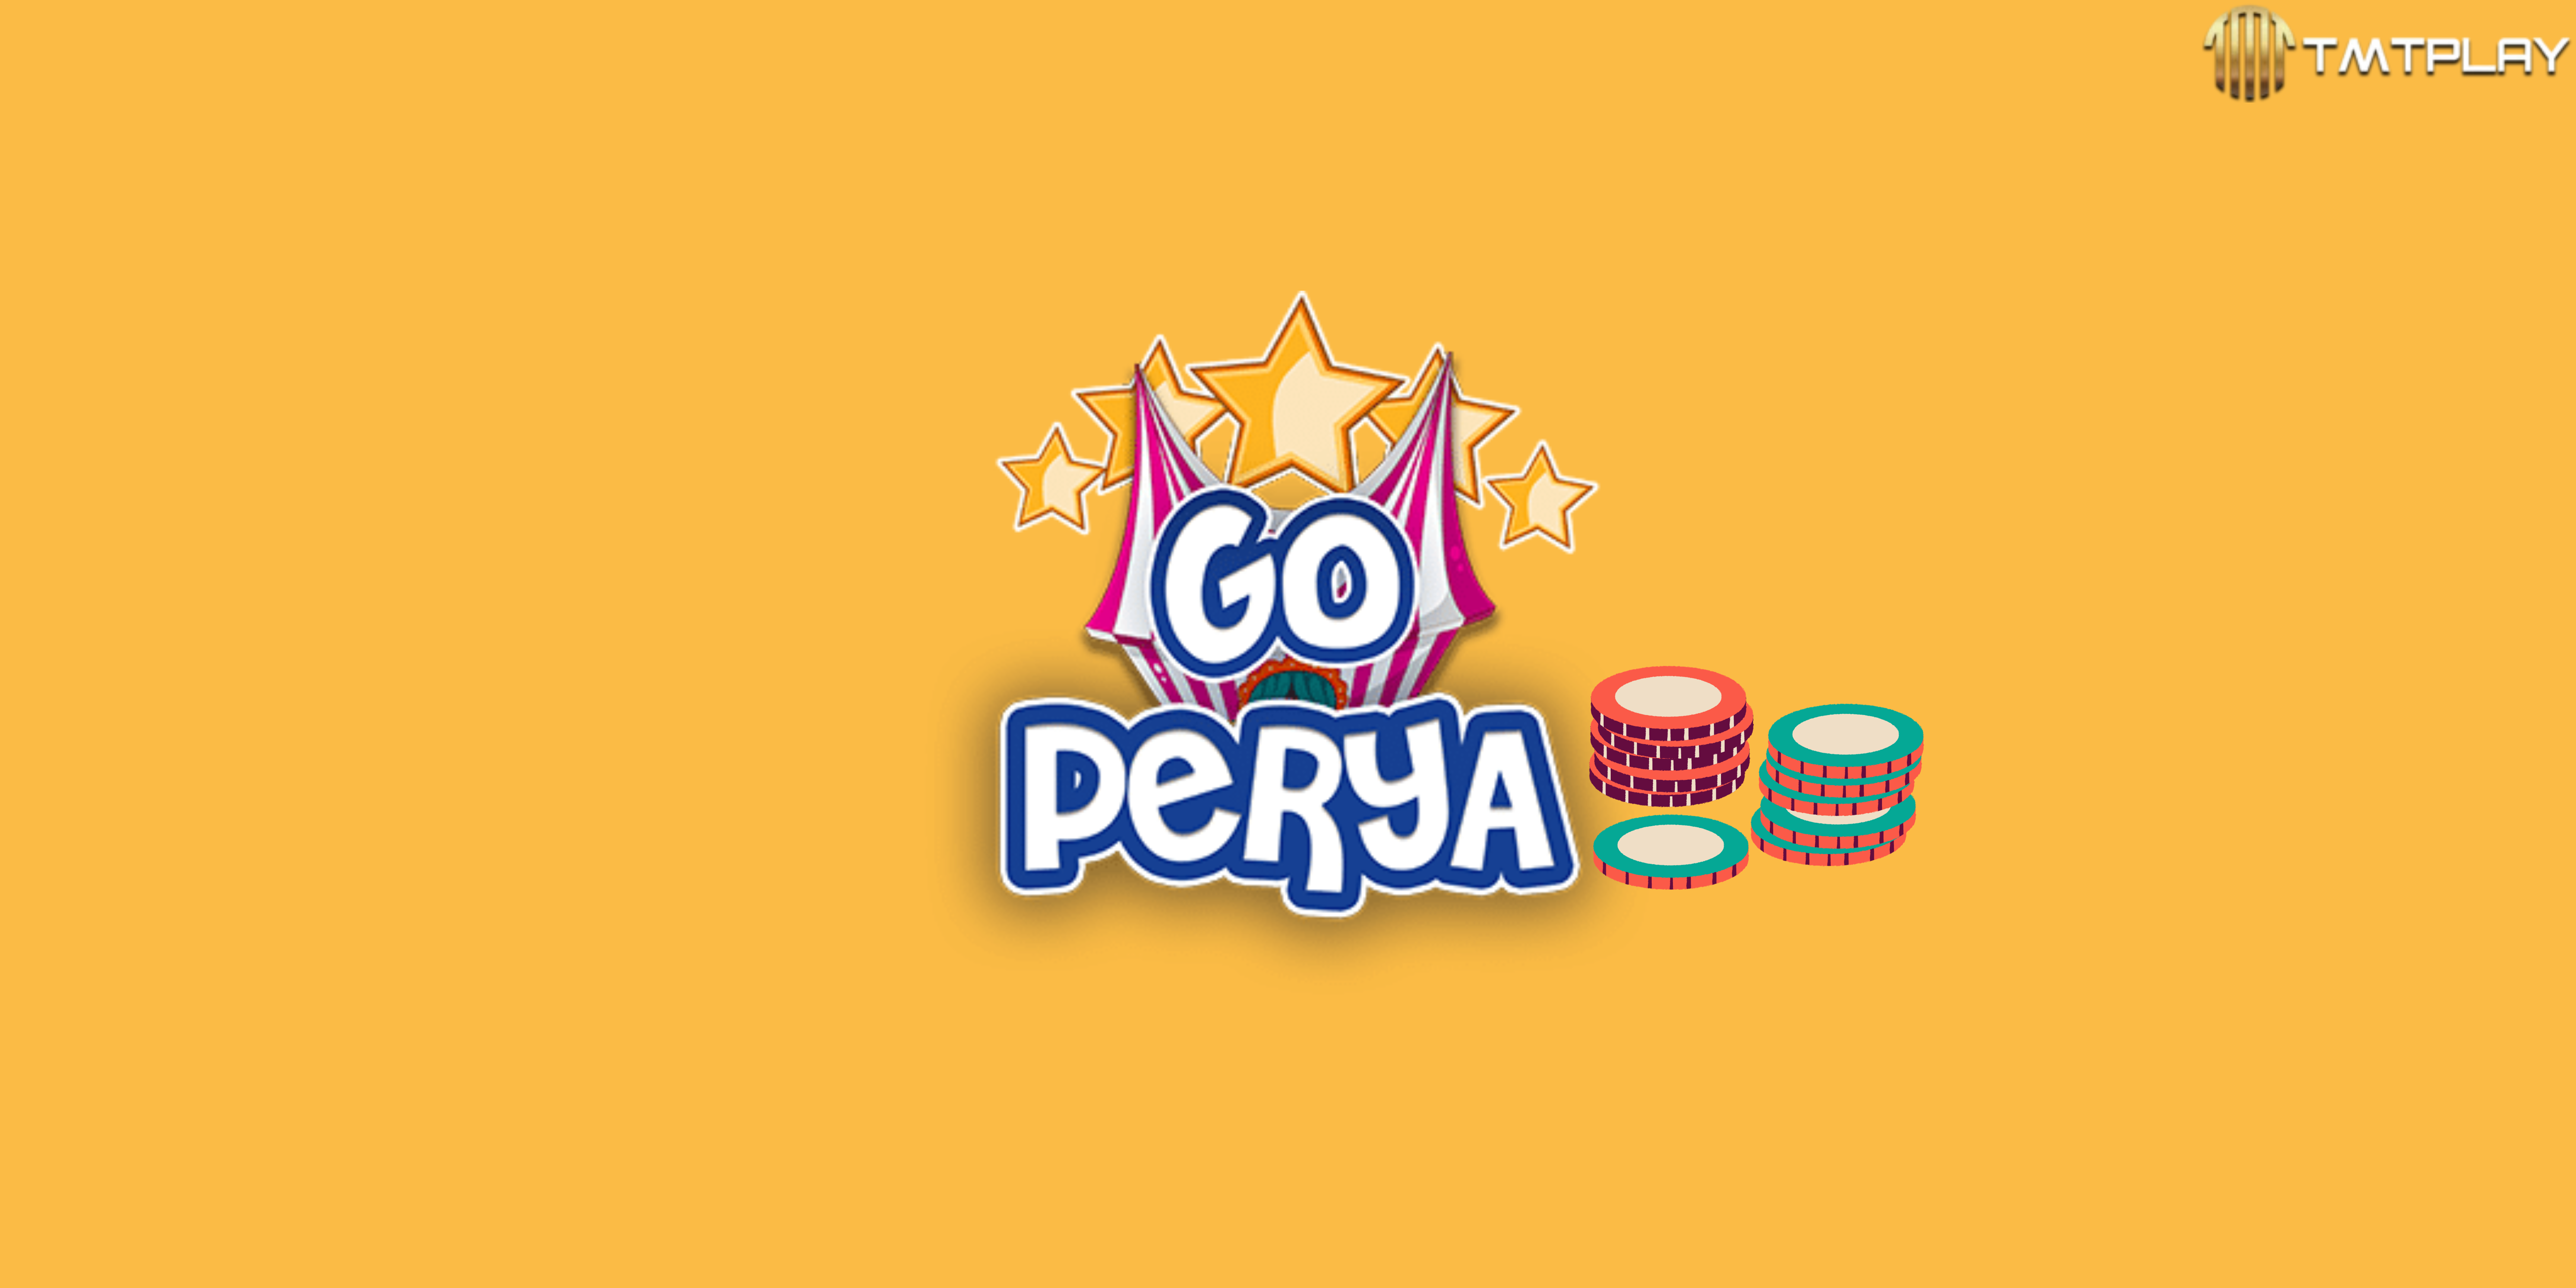 Go perya